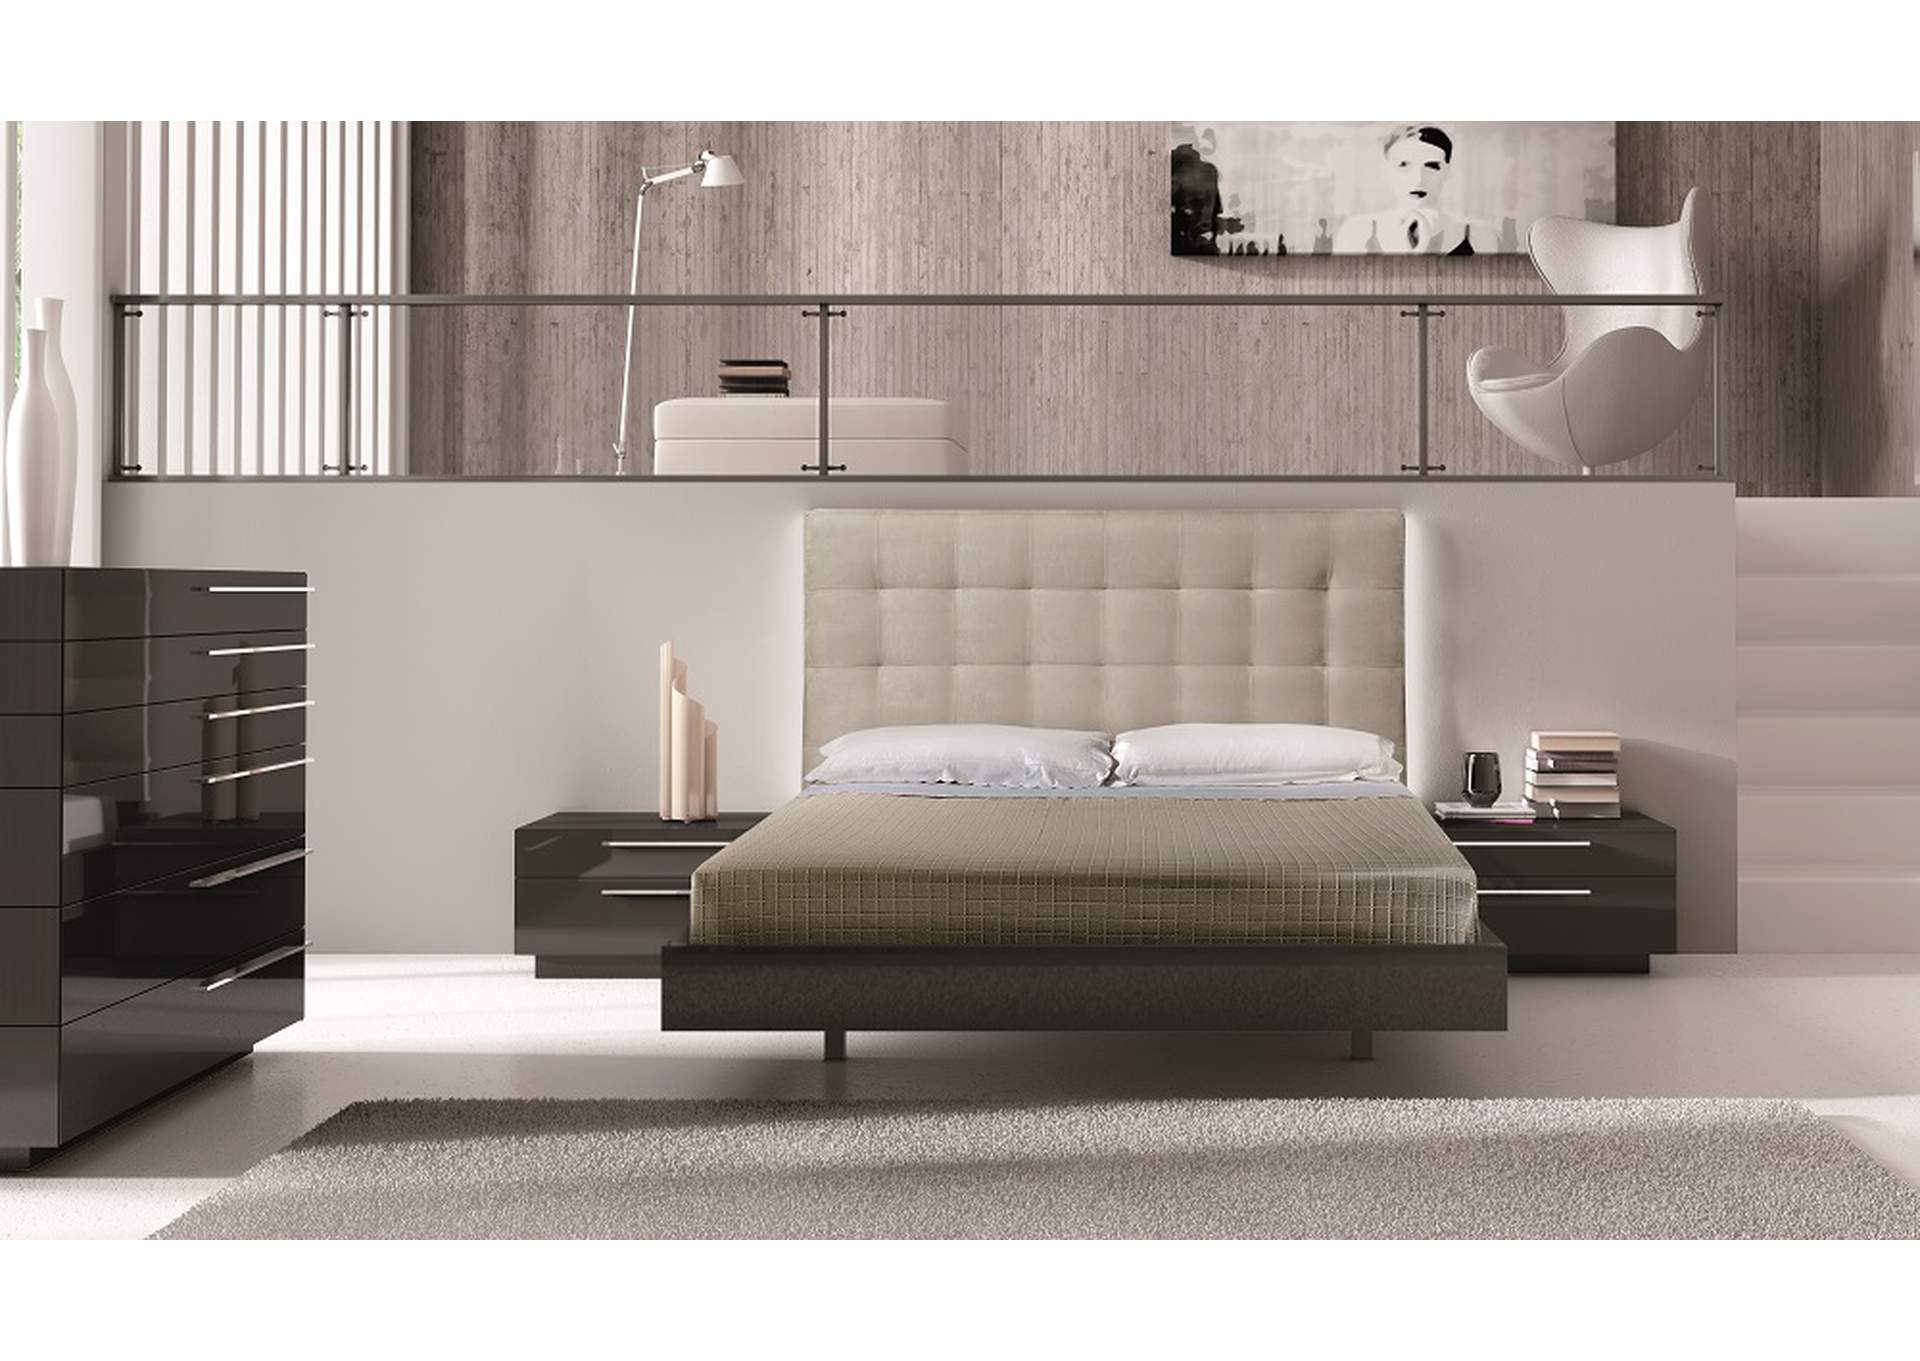 Beja Queen Size Bed,J&M Furniture